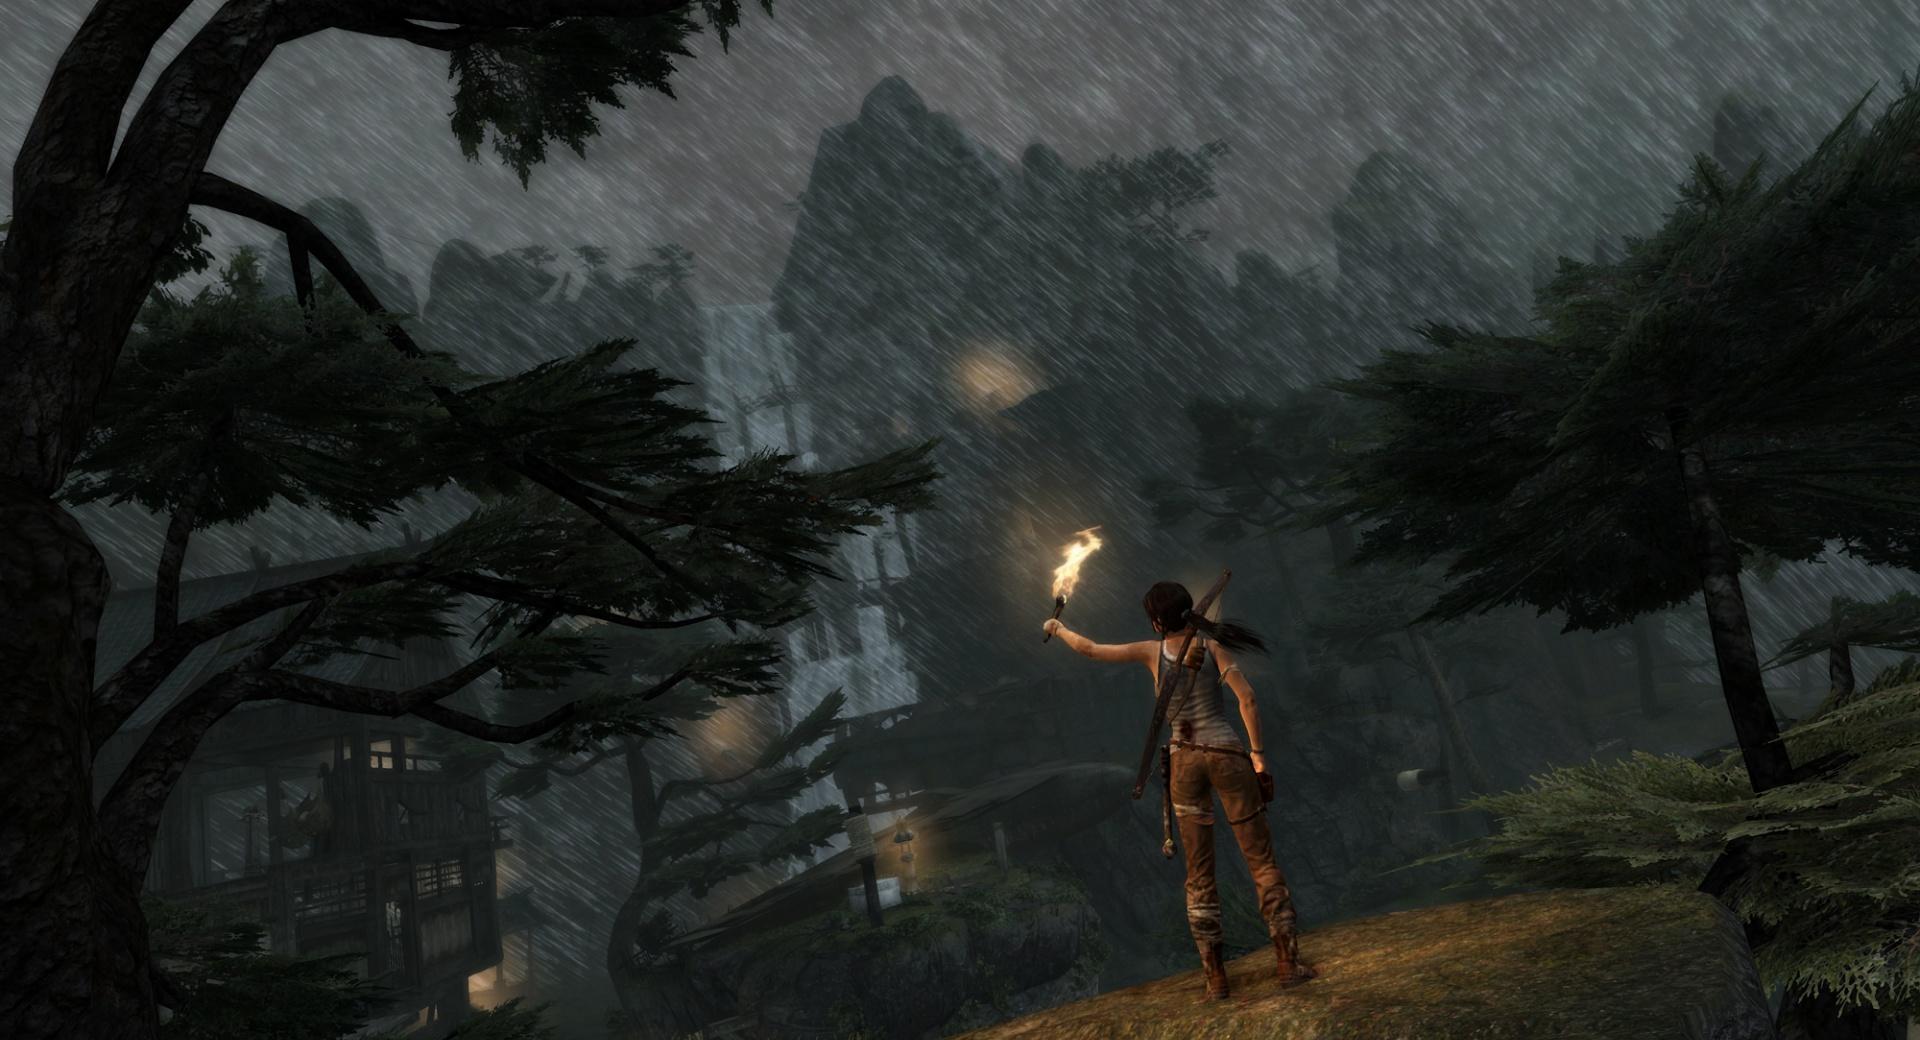 Lara Croft in the Rain (Tomb Raider 2013) at 1600 x 1200 size wallpapers HD quality